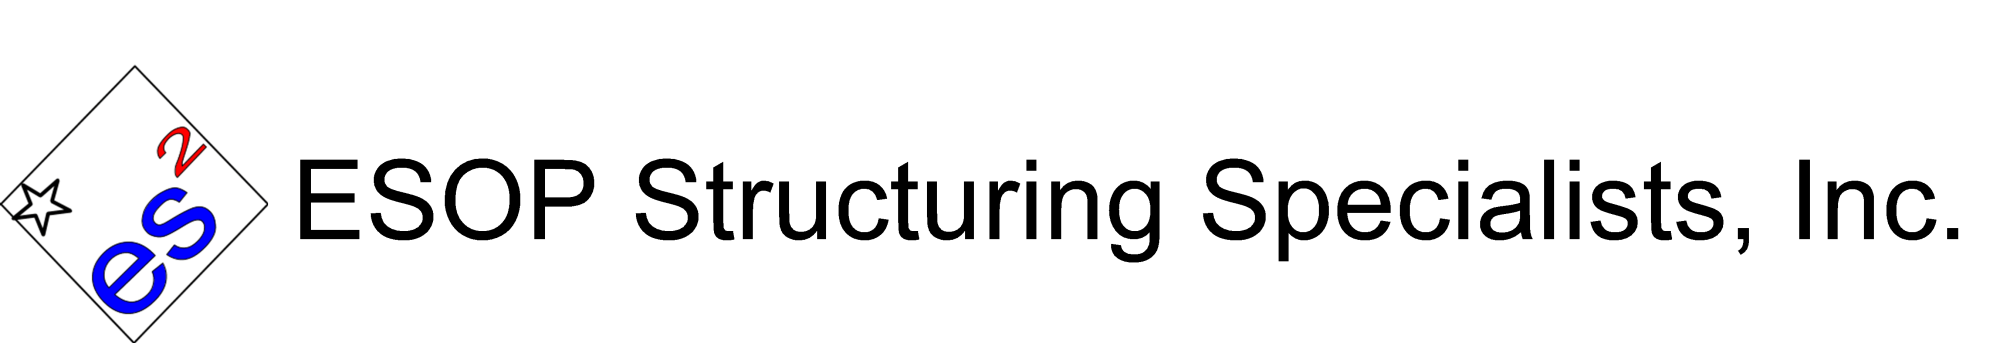 ESOP Logo - ESOP Structuring Specialists